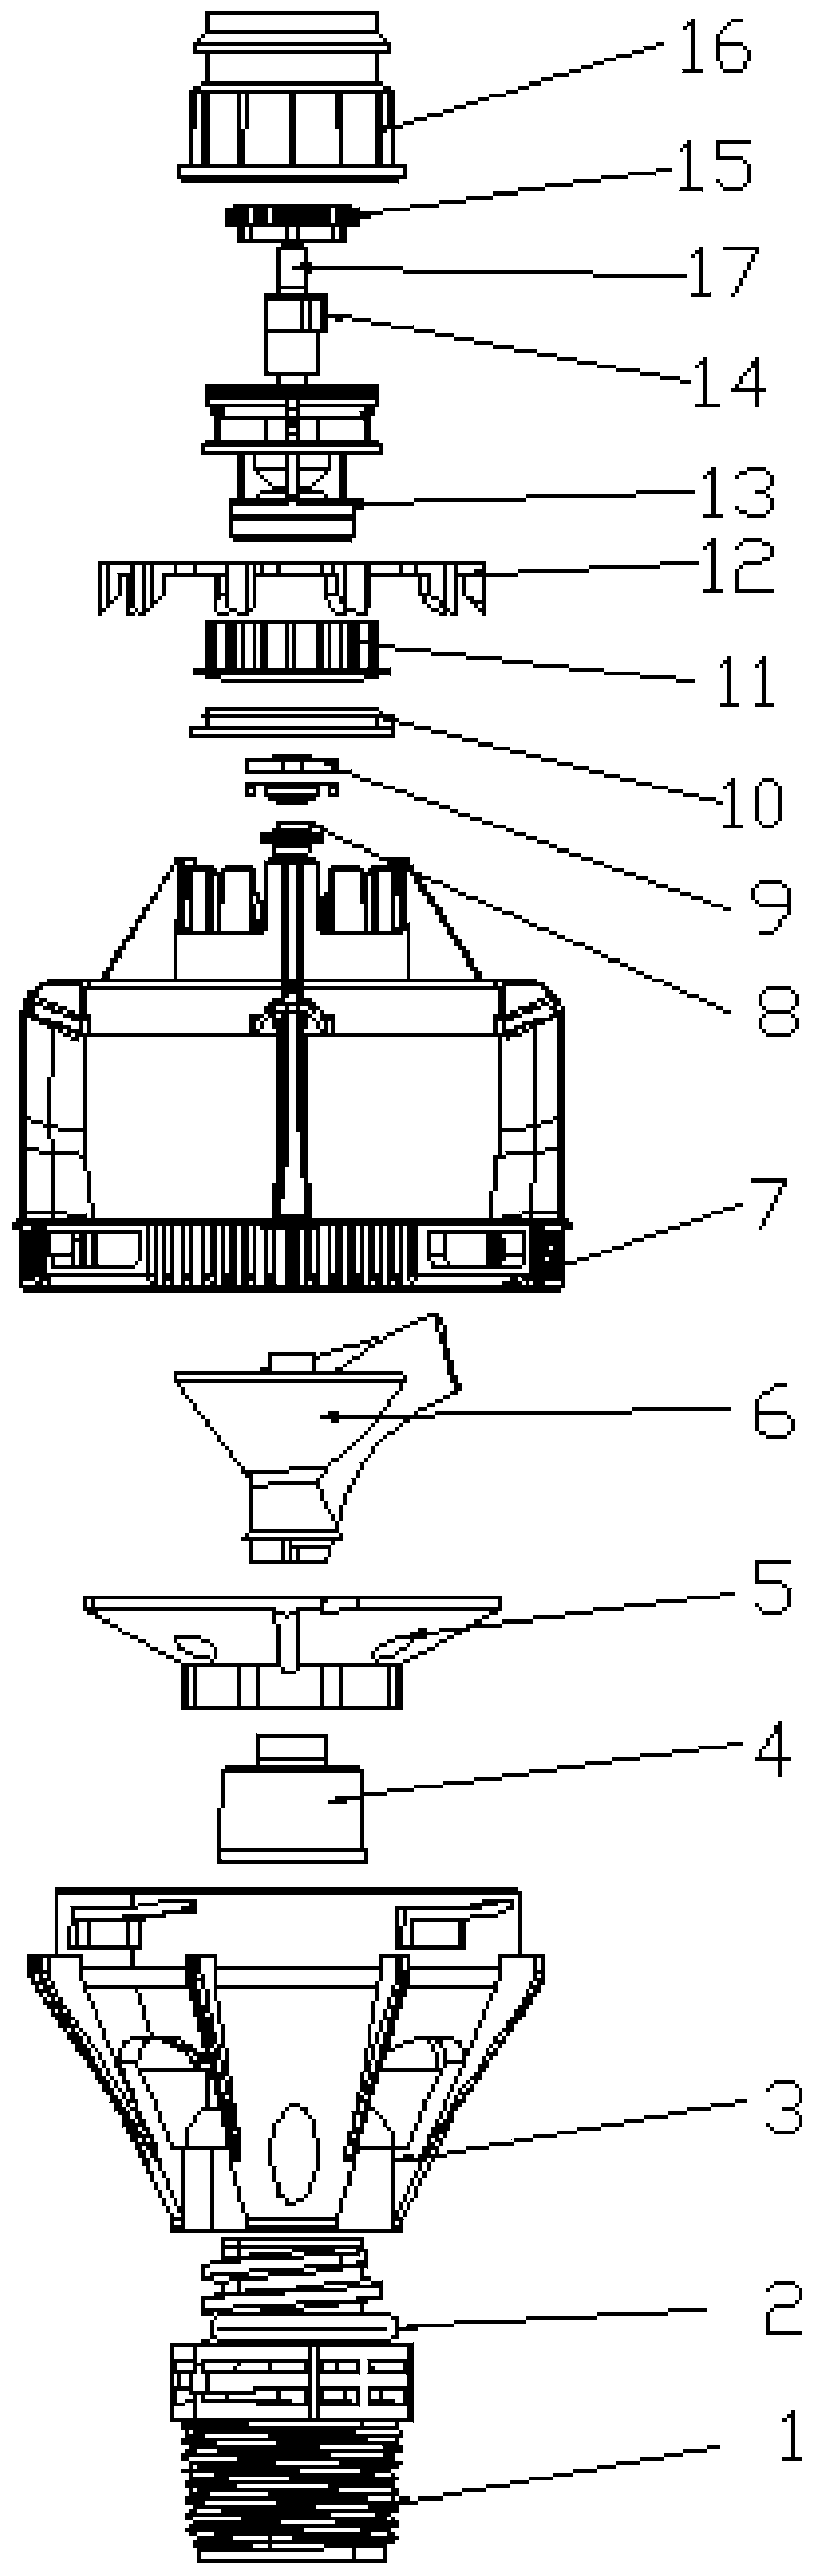 High-uniformity damping rotating nozzle